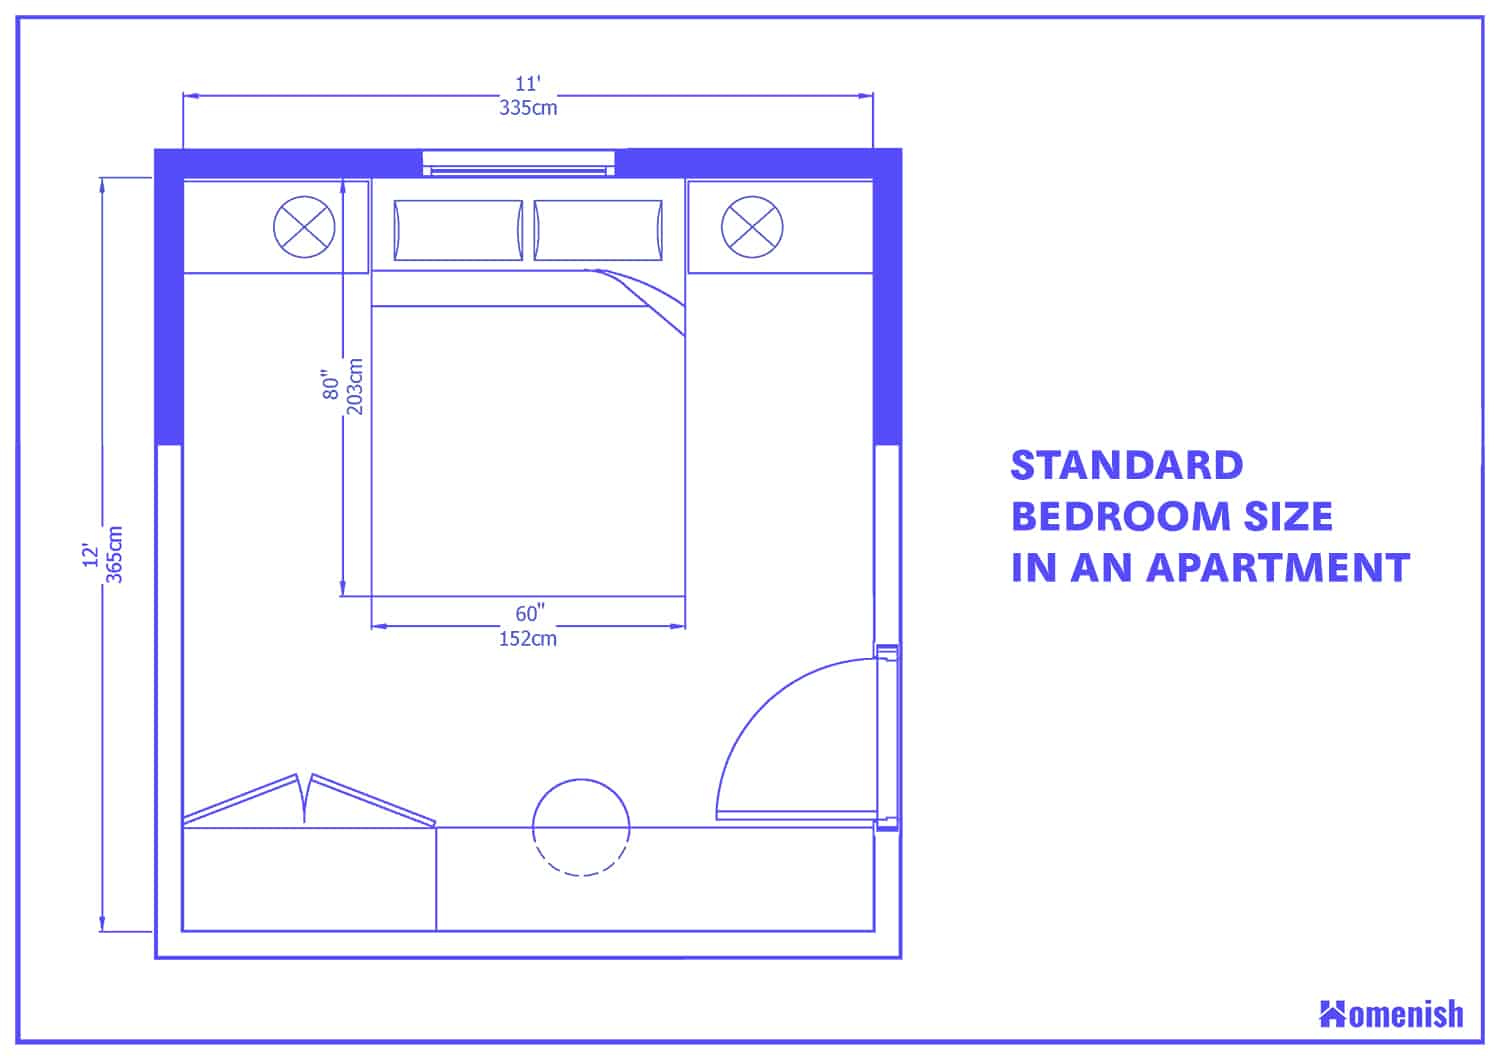 標準臥室尺寸in an Apartment